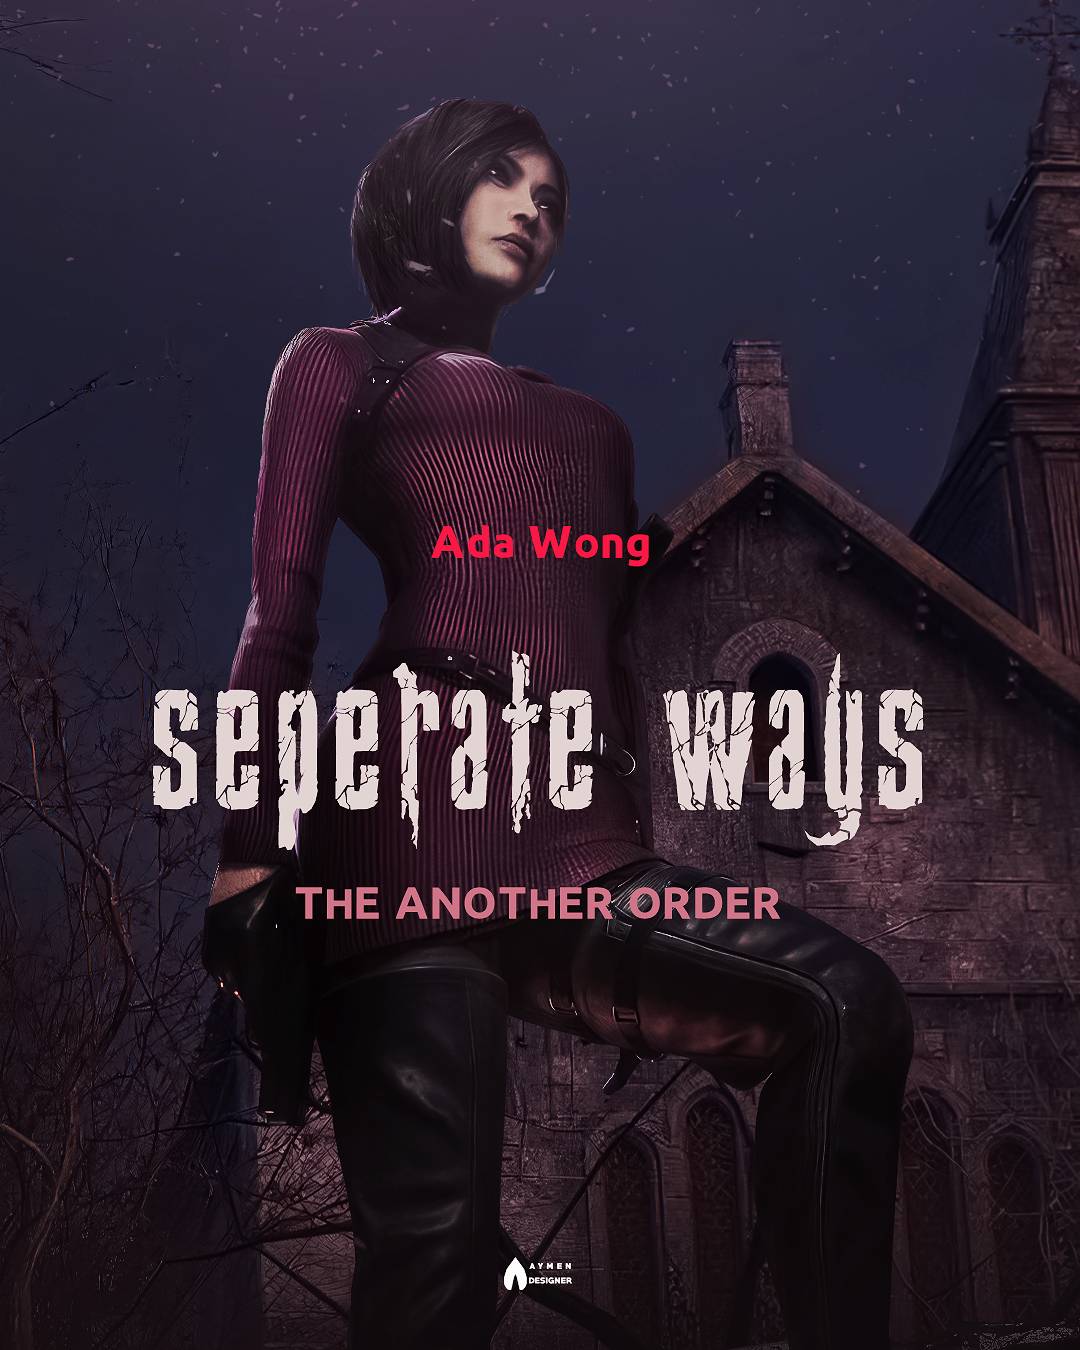 Ada wong Separate ways DLC RE4 Remake by AymenxG4Ds on DeviantArt